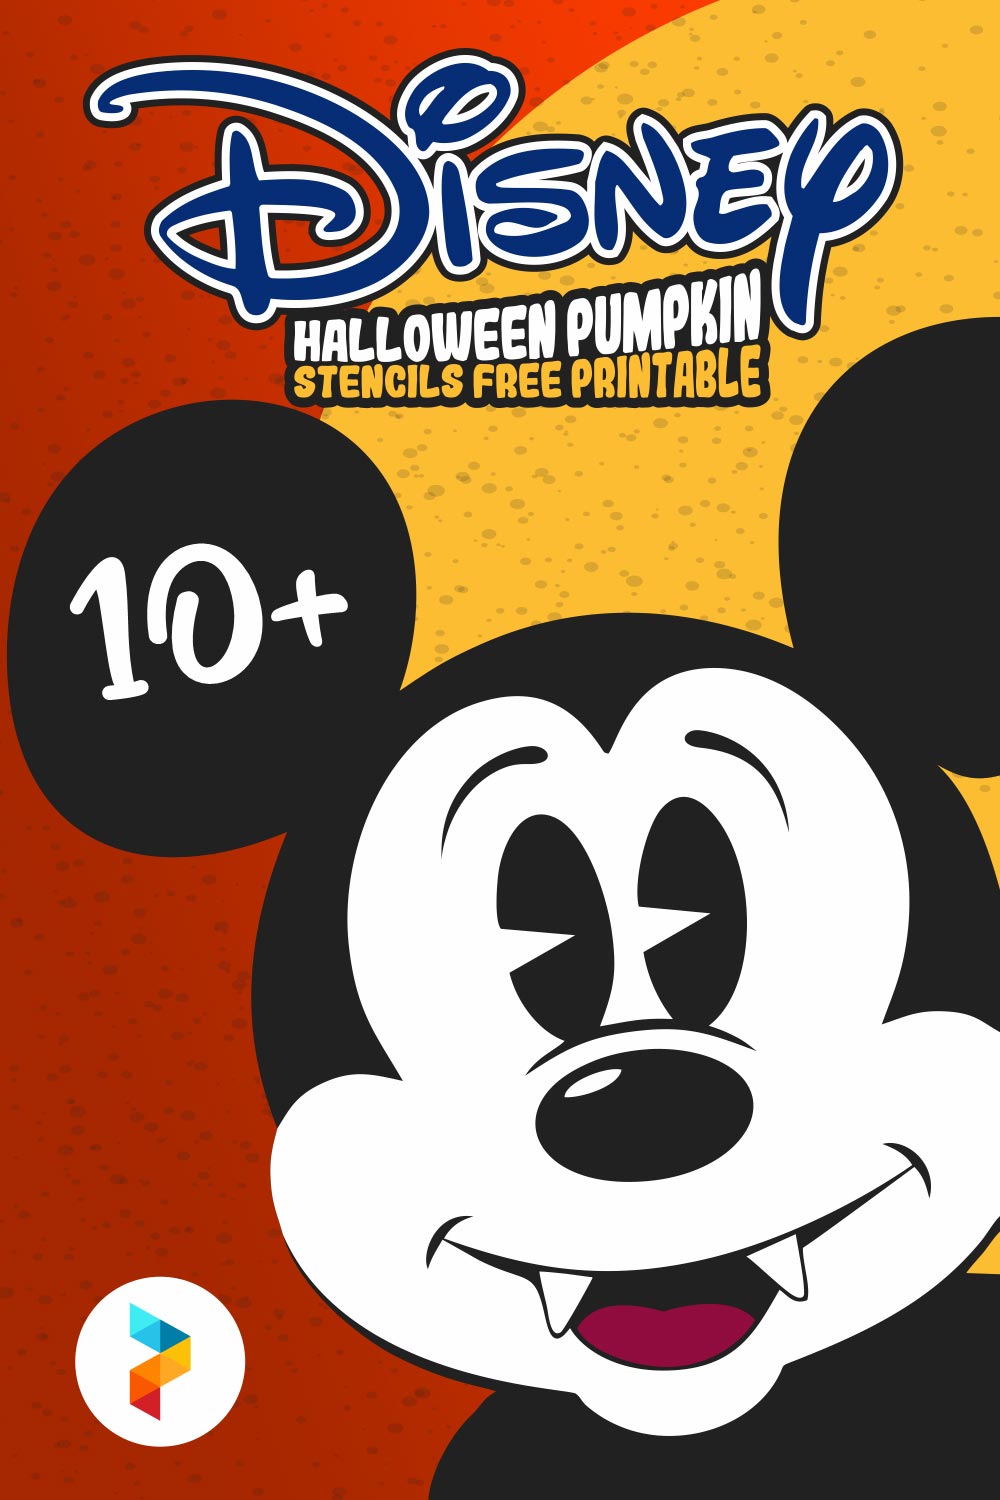 Disney Halloween Pumpkin Stencils Printable